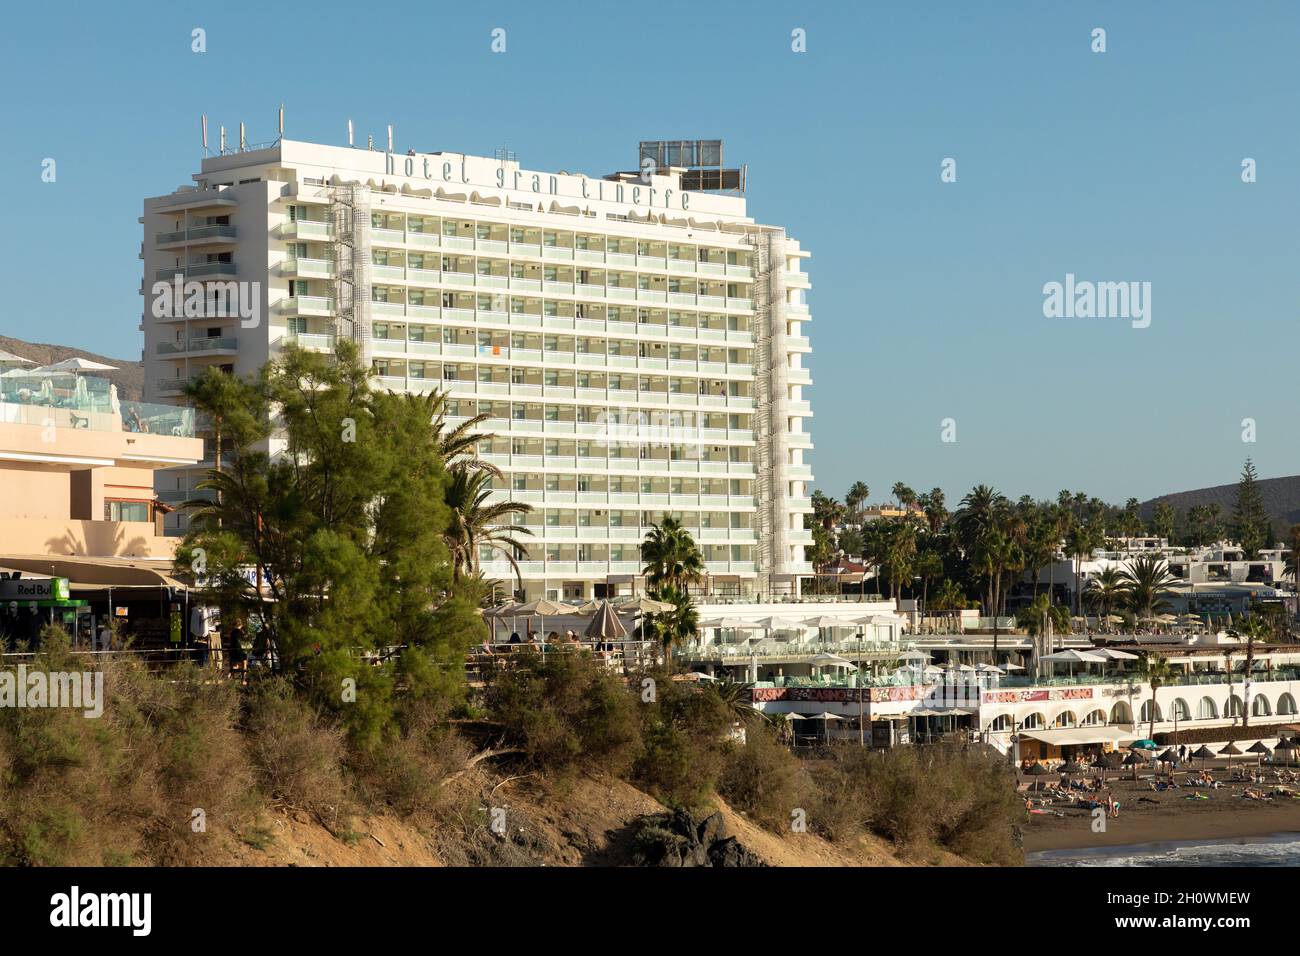 H10 Hotel Gran Tinerfe en Costa Adeje, Tenerife Foto de stock